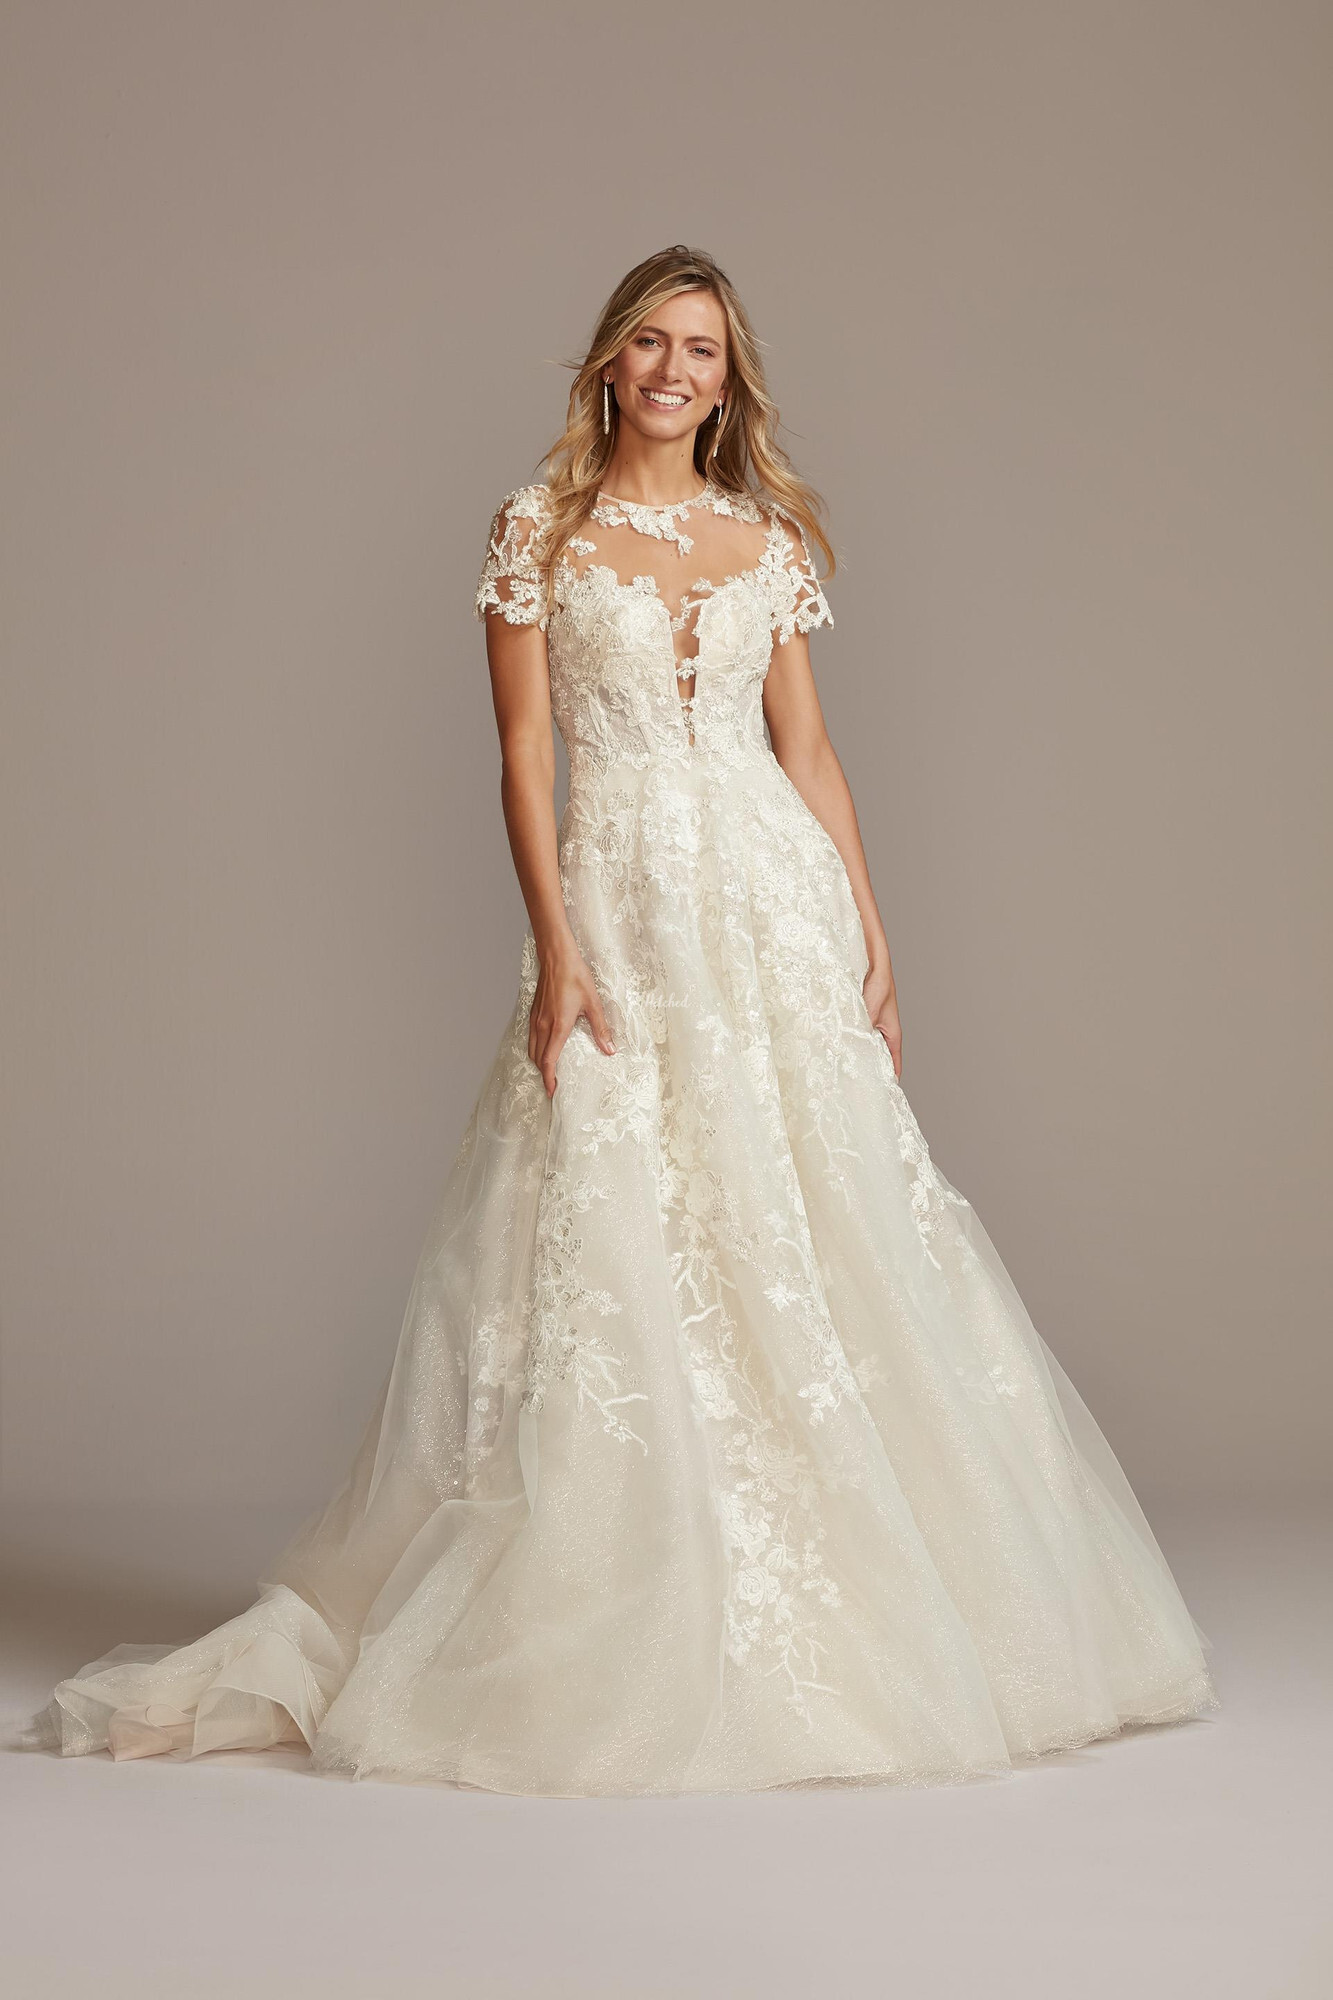 Cwg833 Wedding Dress From Oleg Cassini At Davids Bridal Uk 9450